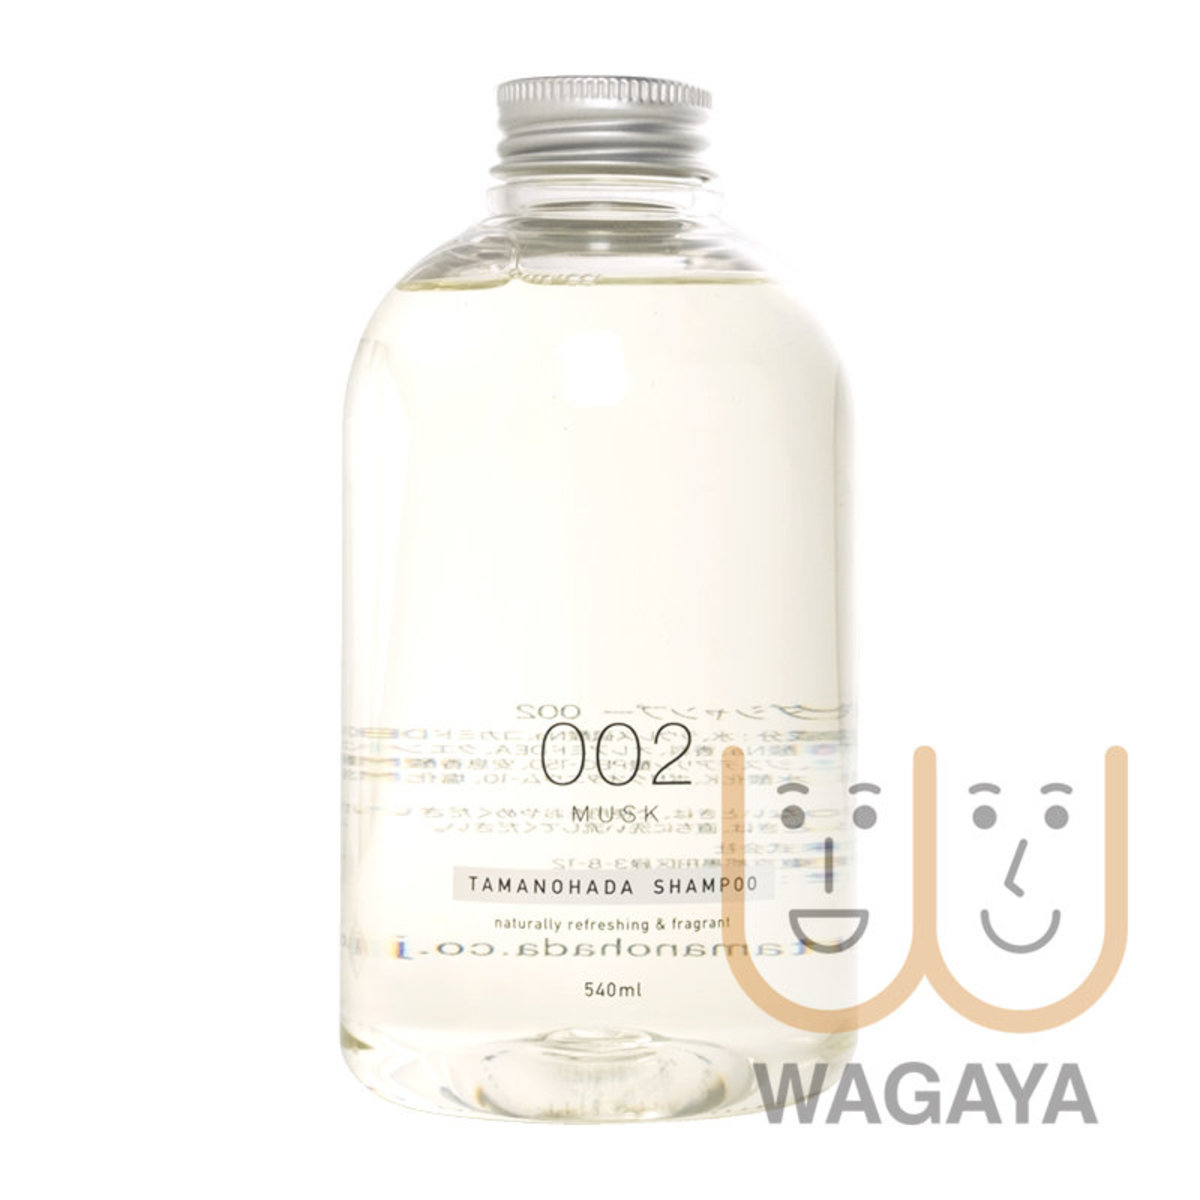 002 Musk Shampoo 540ml (207023) (Parallel Import)